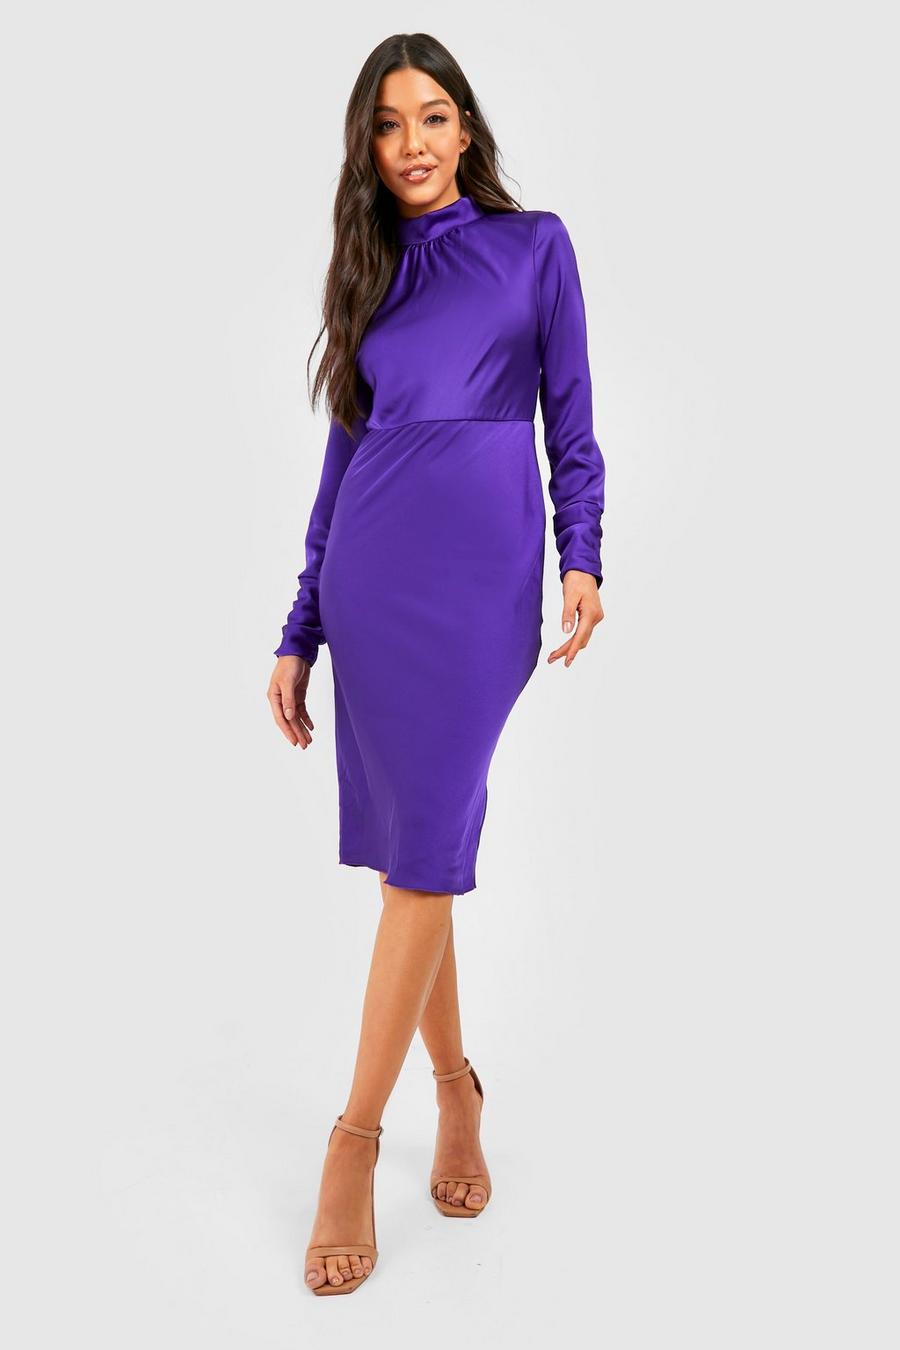 Jewel purple Satin Open Back High Neck Midi Dress